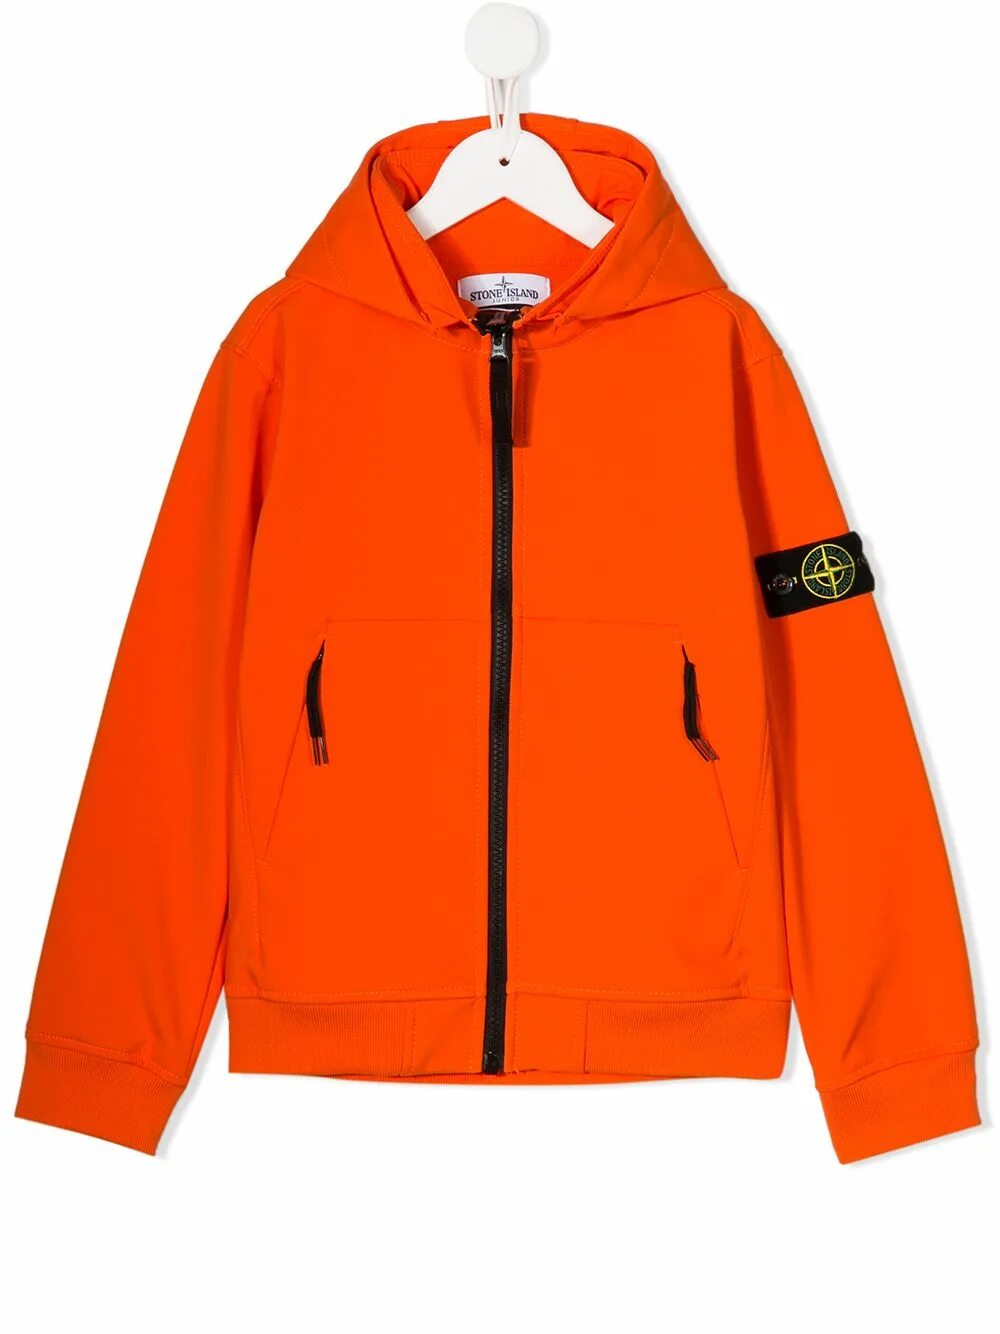 Island junior. Оранжевая куртка стон Айленд. Stone Island Junior куртка. Stone Island Junior куртка с капюшоном. Оранжевая куртка Stone Island.